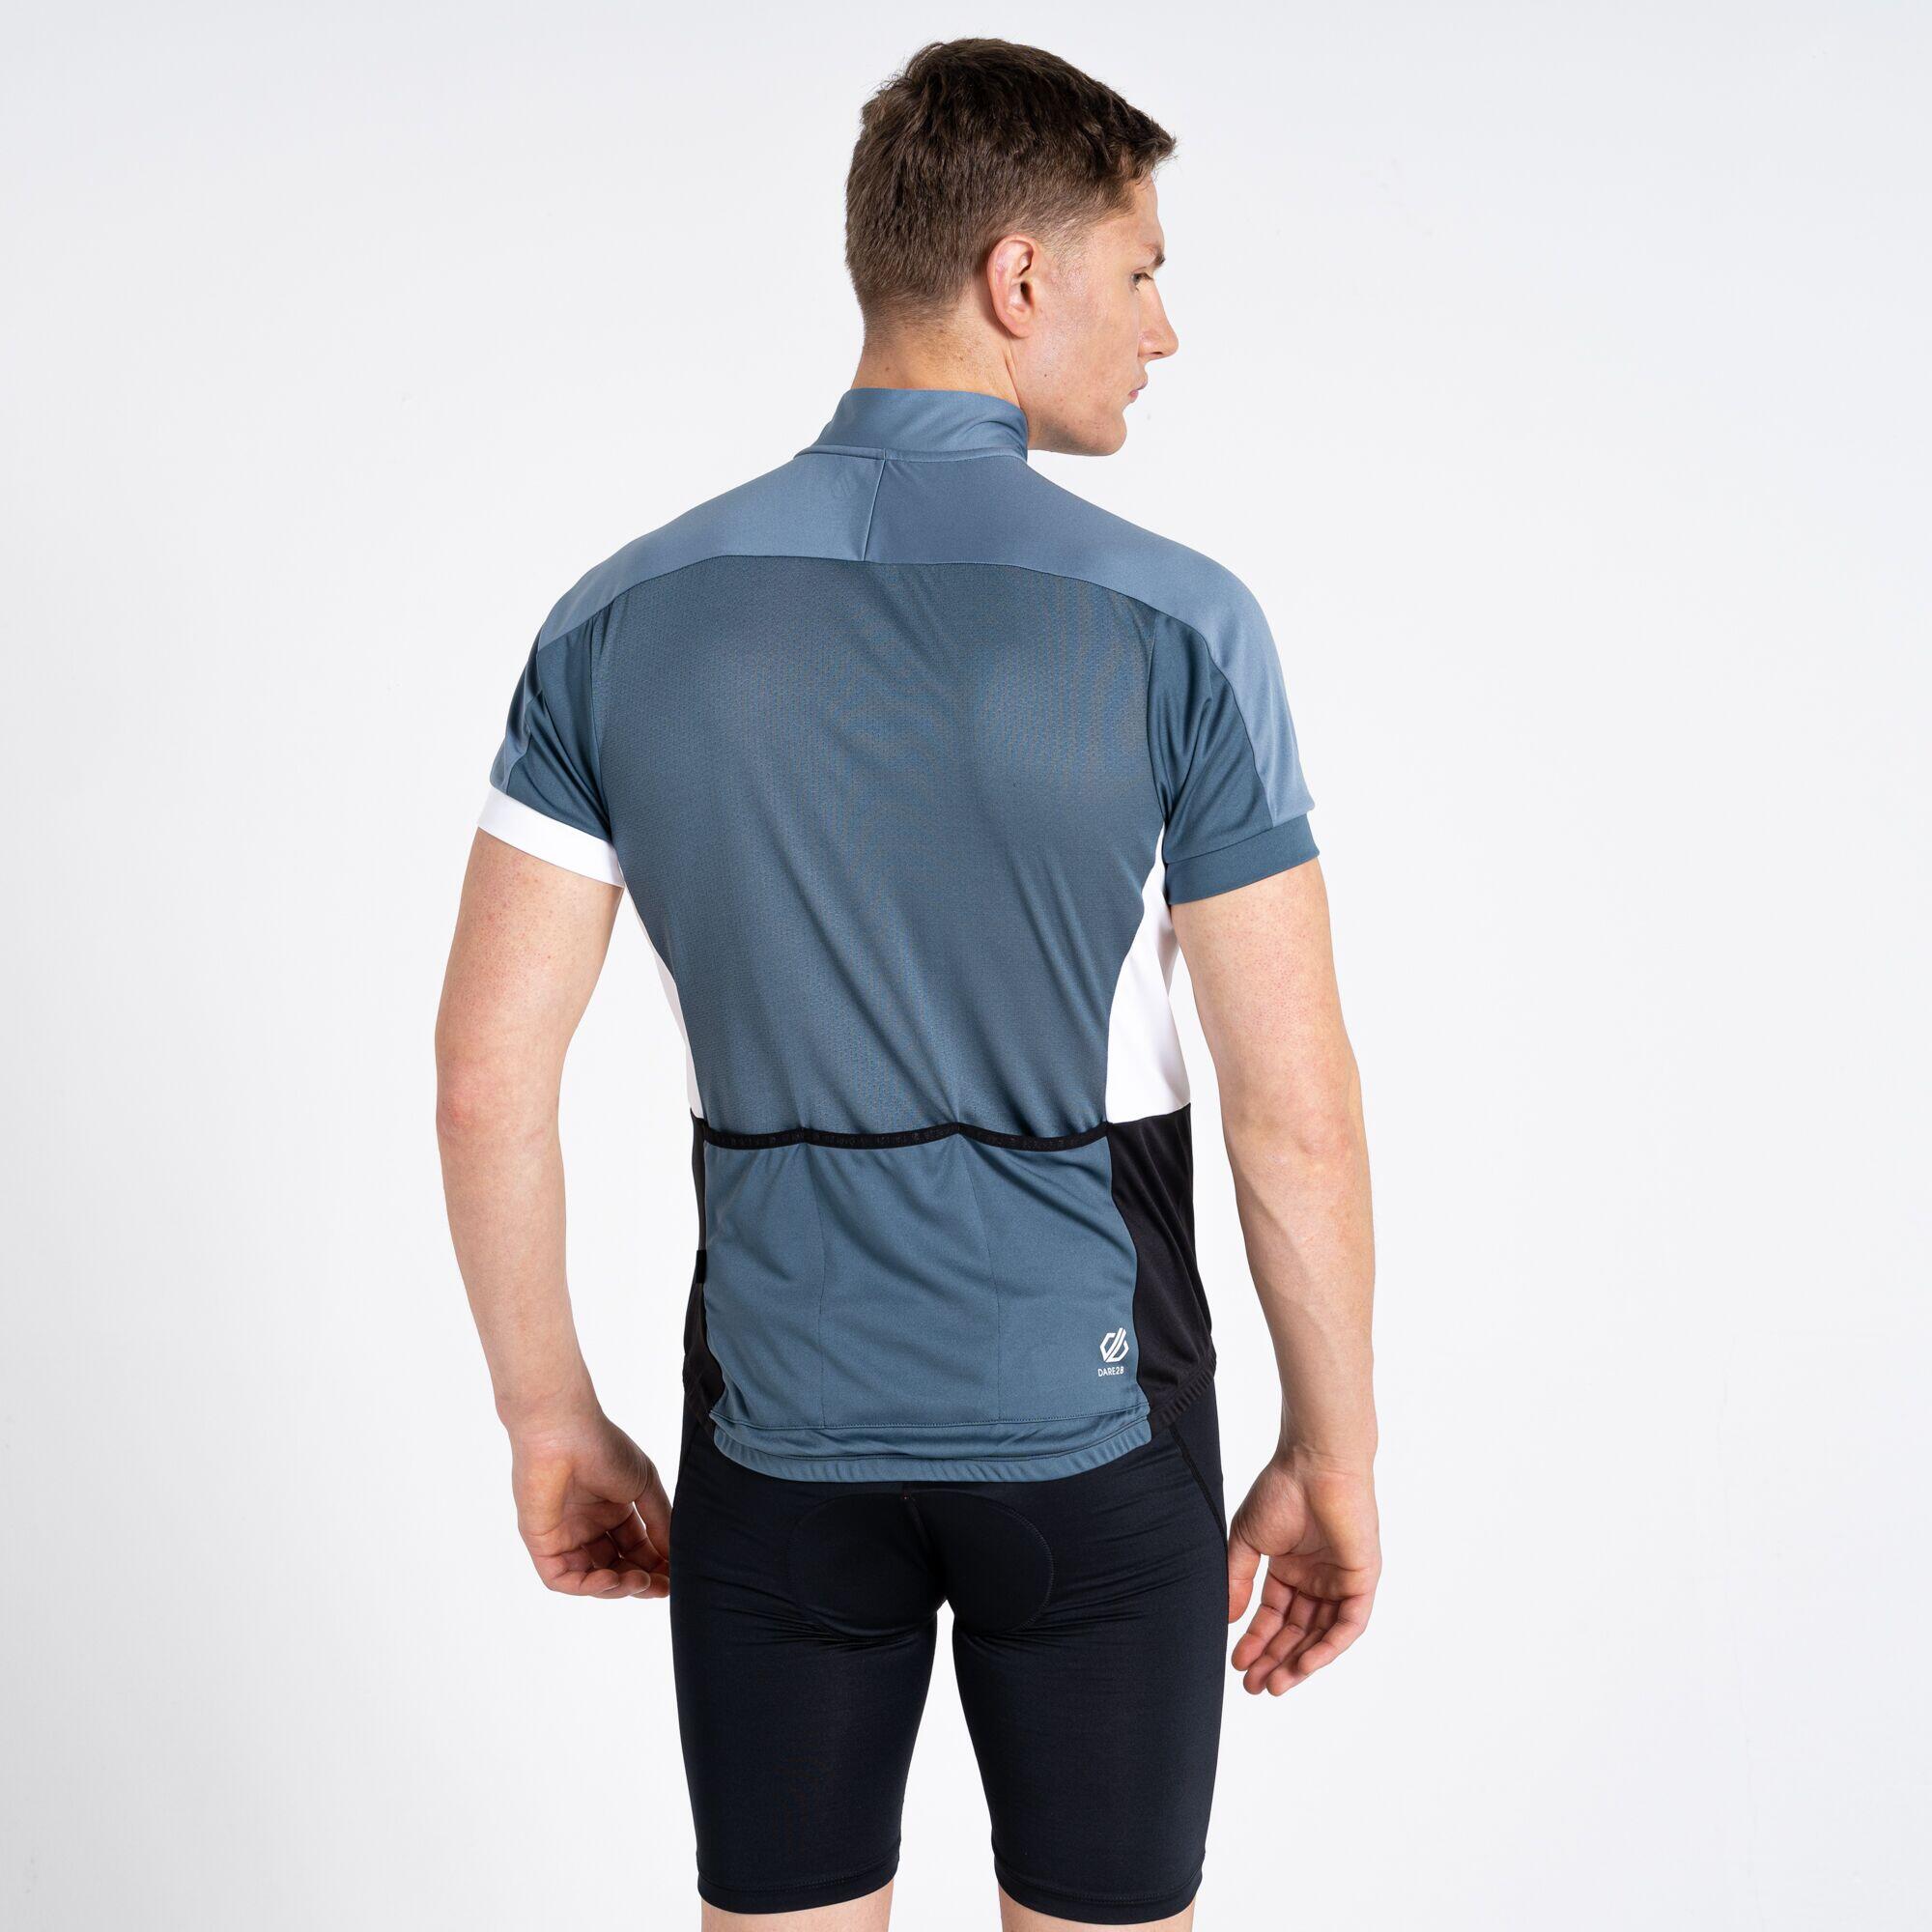 Protraction II Men's Cycling Full Zip Short Sleeve T-Shirt - Black / Grey 3/7